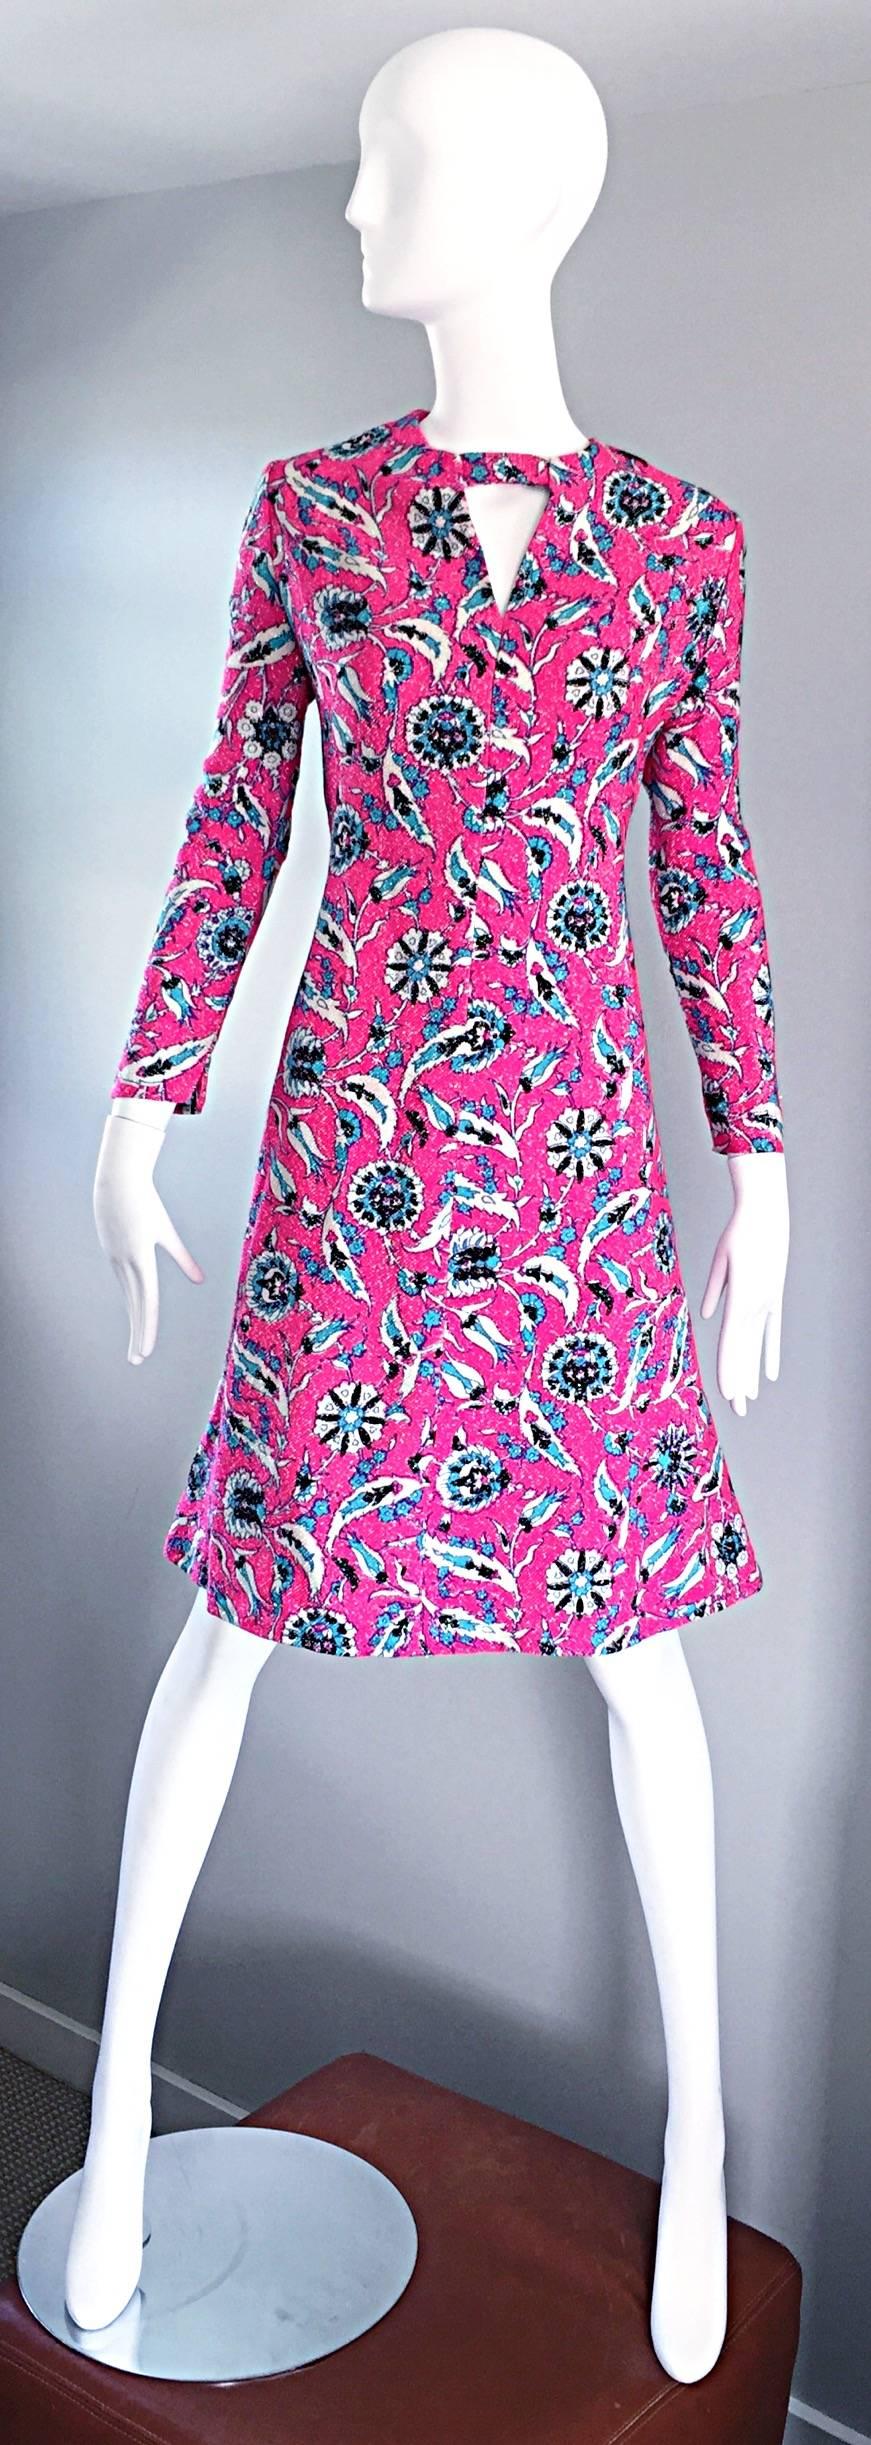 Vintage Adele Simpson Plus Size 1960s Hot Pink + Silver + Blue Metallic Dress For Sale 1